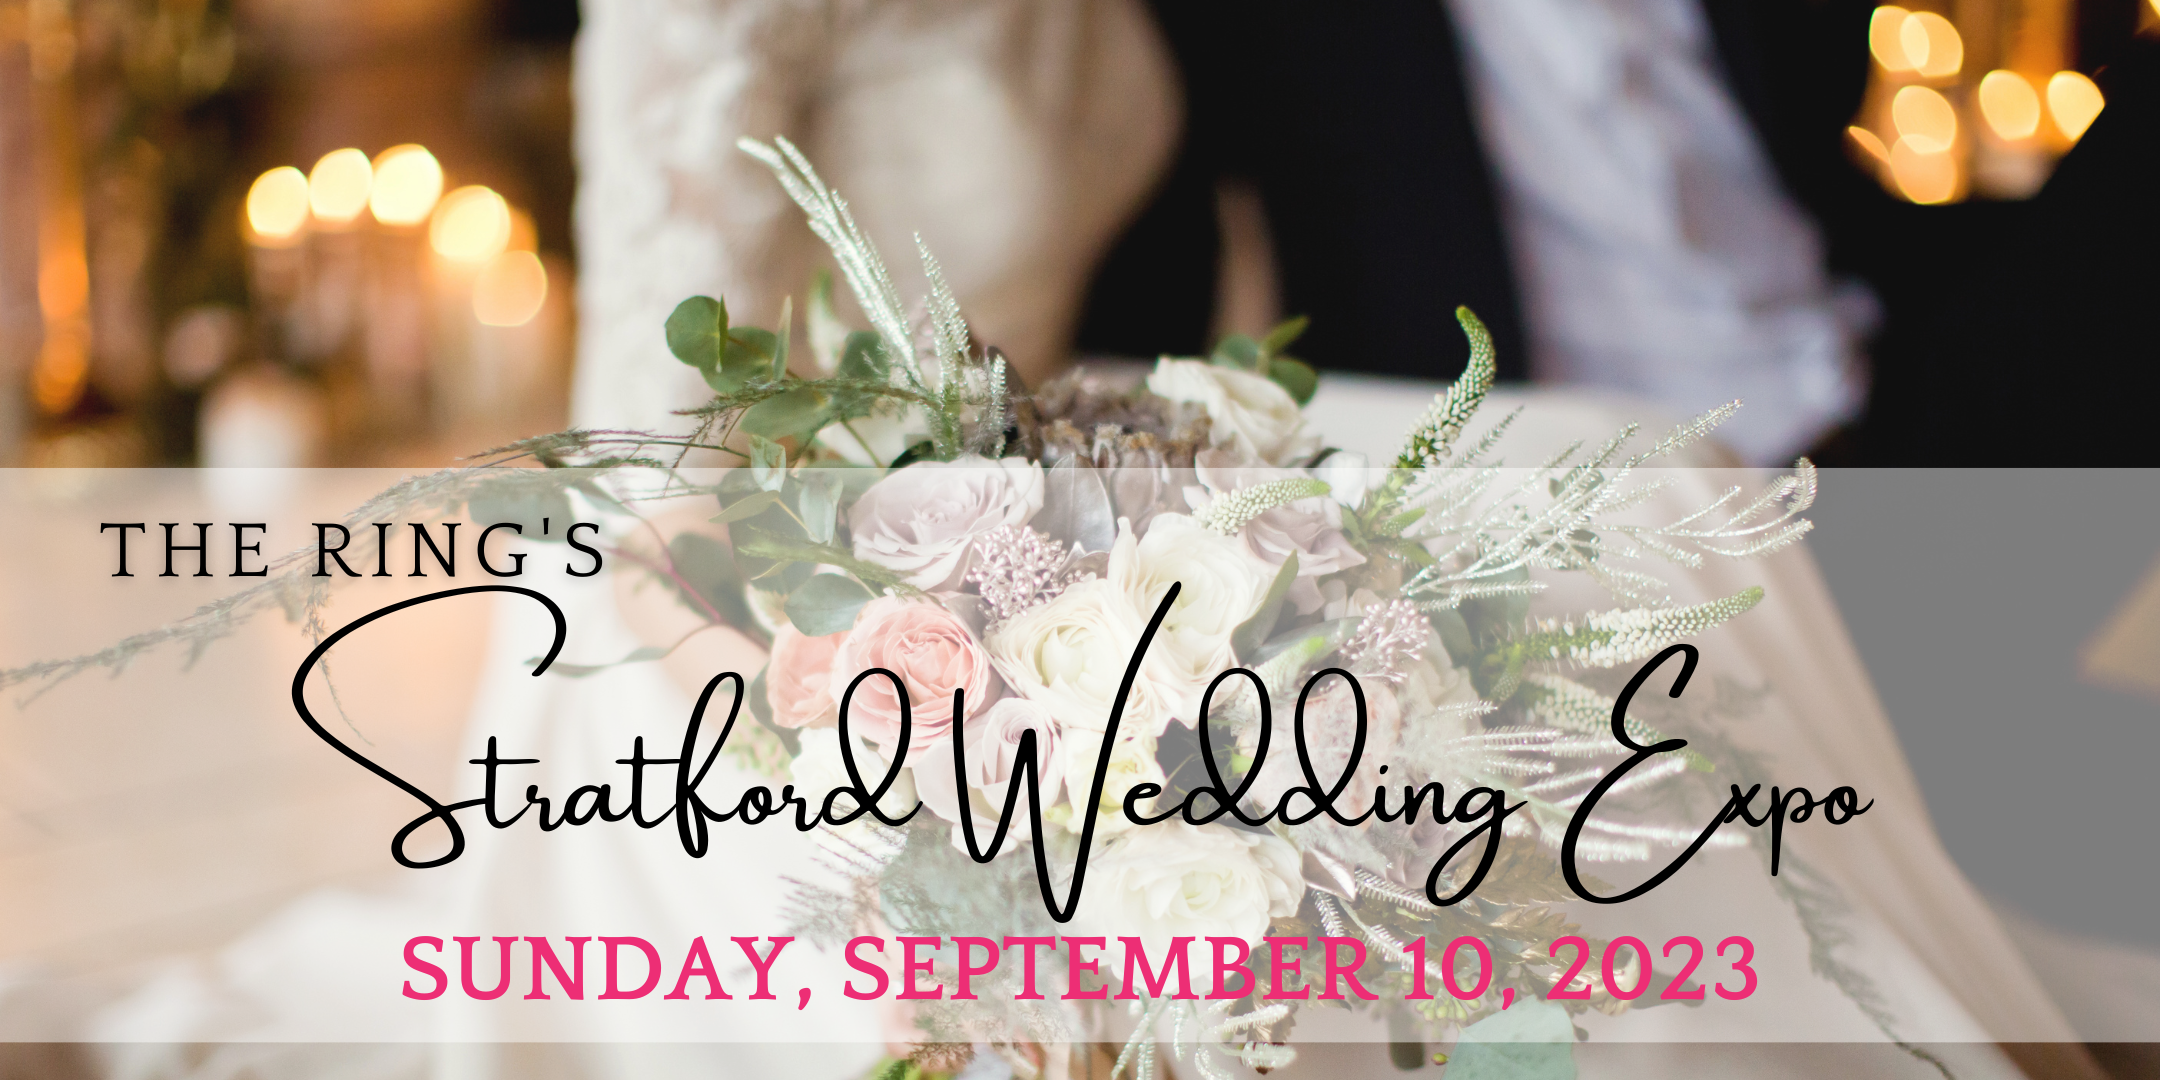 The Ring's Stratford Wedding Expo, Sept 10, 2023 @ Best Western Arden Park Hotel